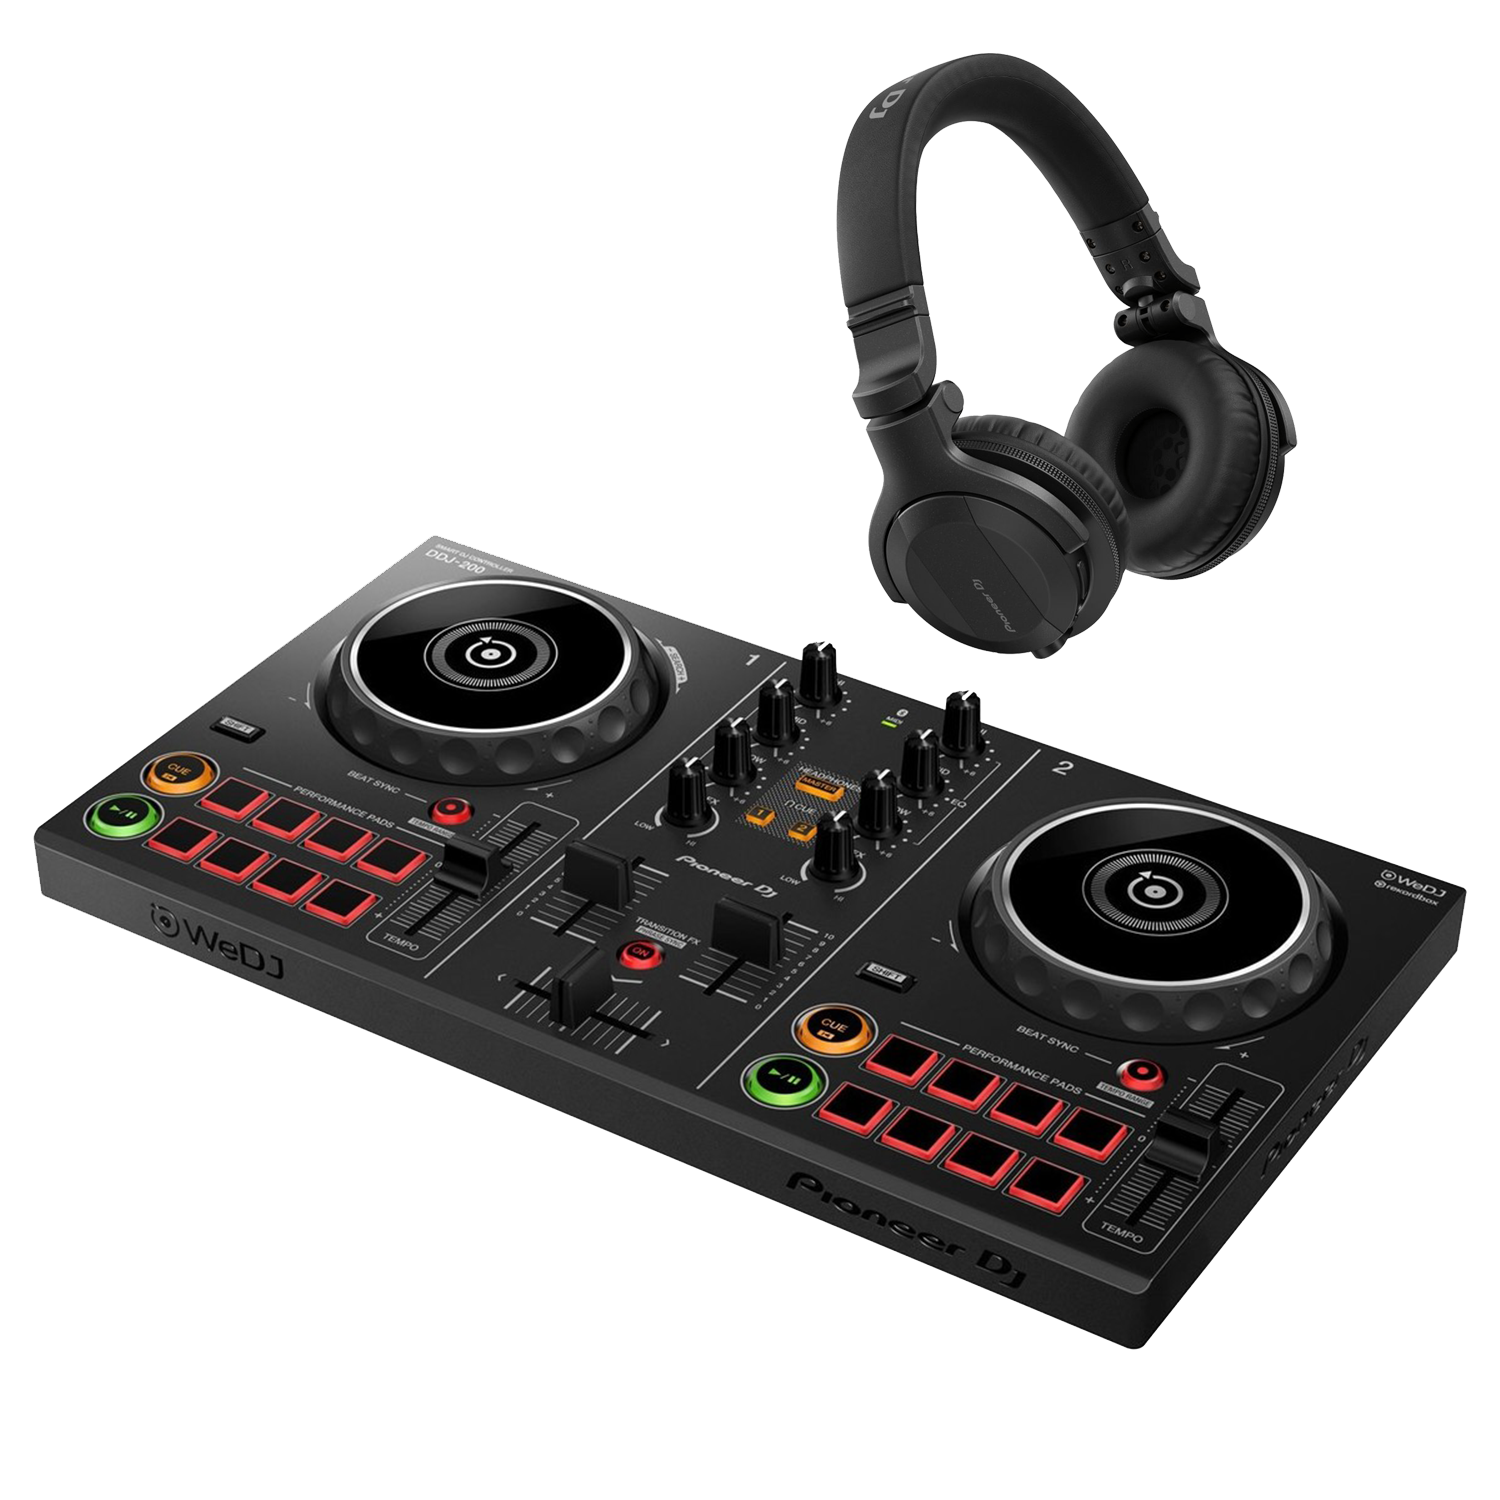 DDJ-200 Smart DJ Controller with HDJ-CUE1 Headphones